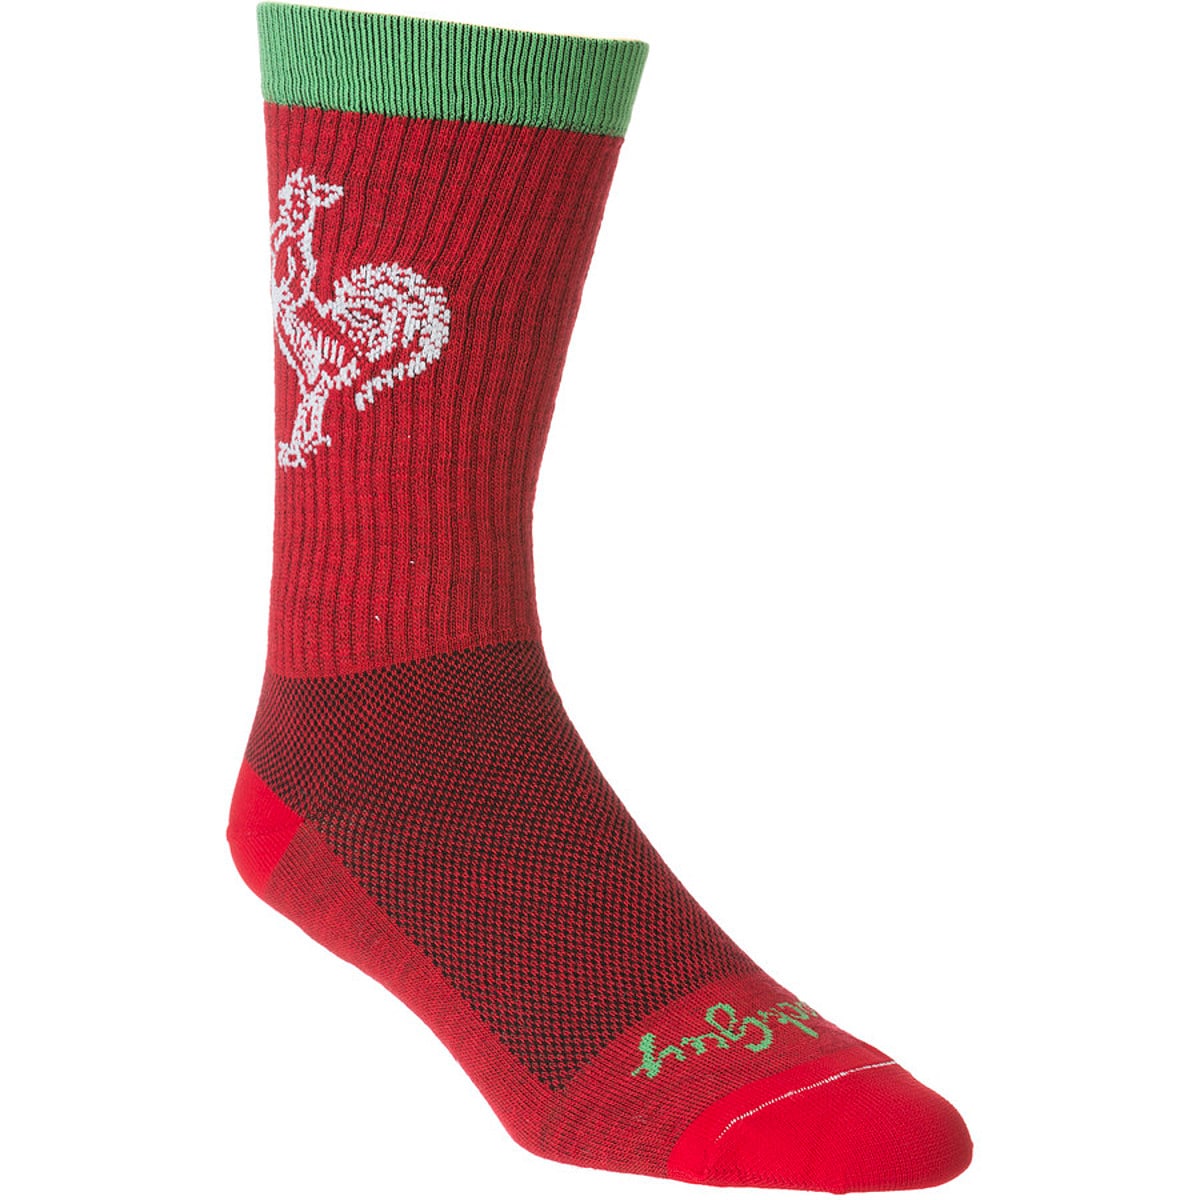 SockGuy Sriracha Wool Crew Socks Men's